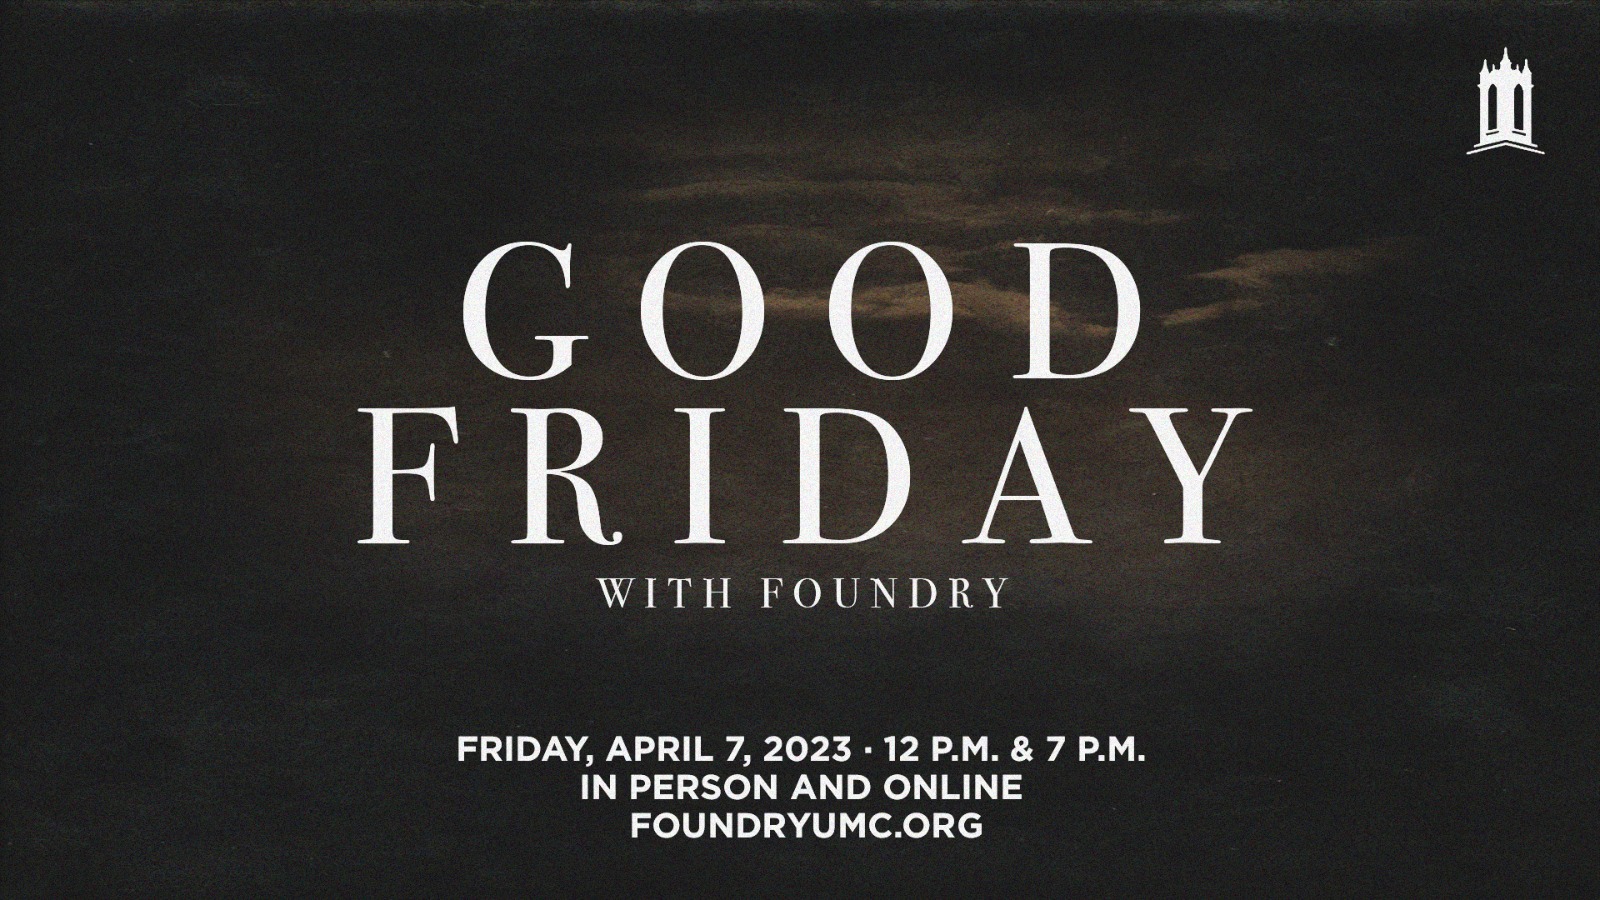 Good Friday at Foundry